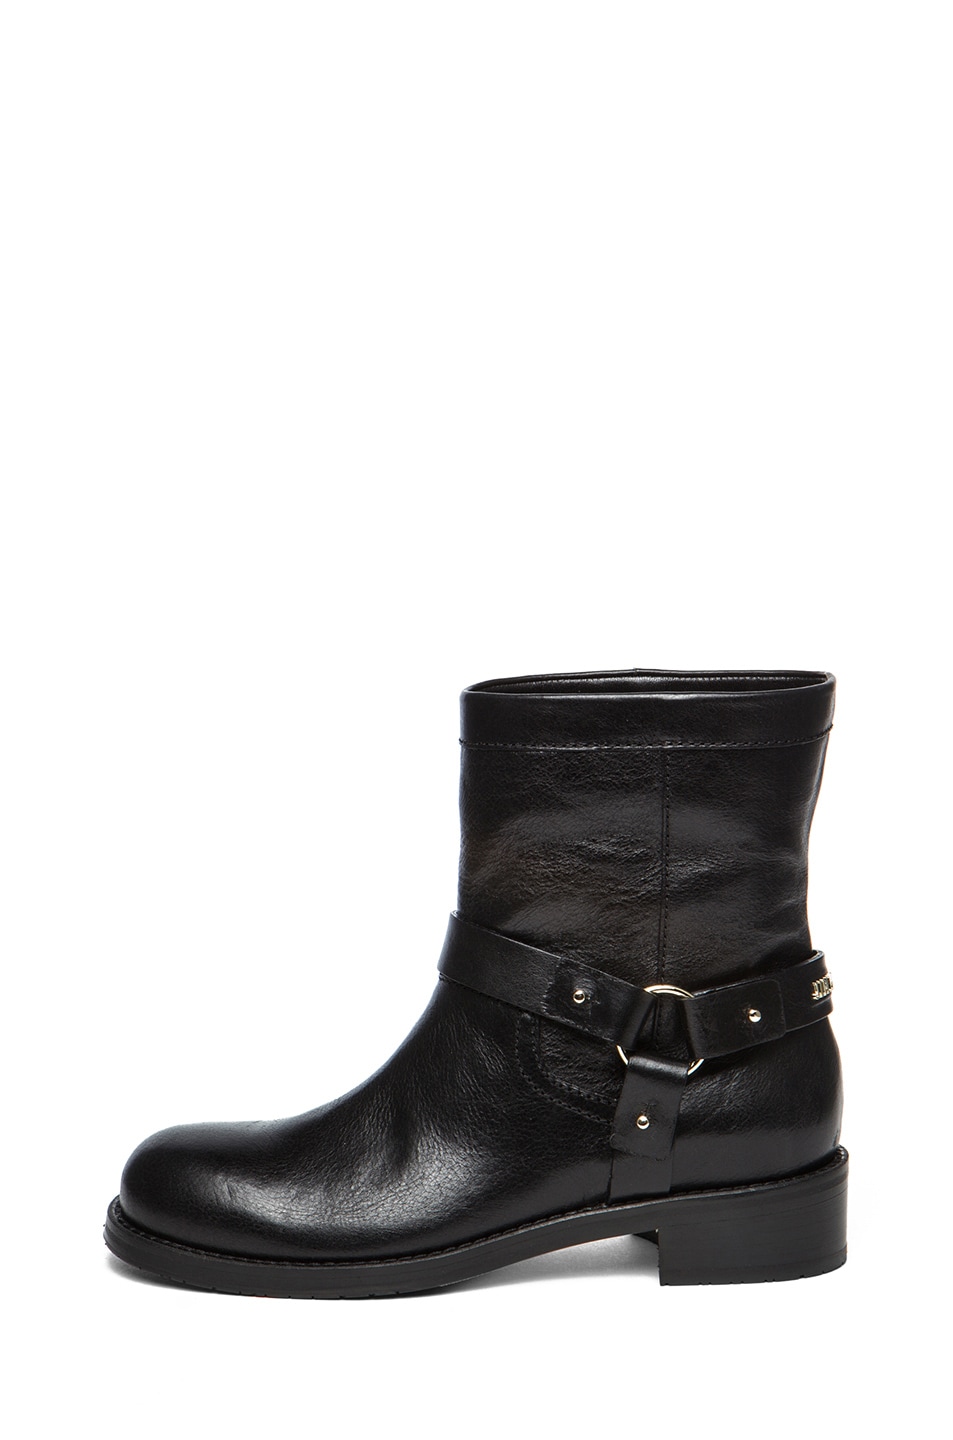 Jimmy Choo Dixie Shiny Calfskin Leather Flat Ankle Boot in Black | FWRD